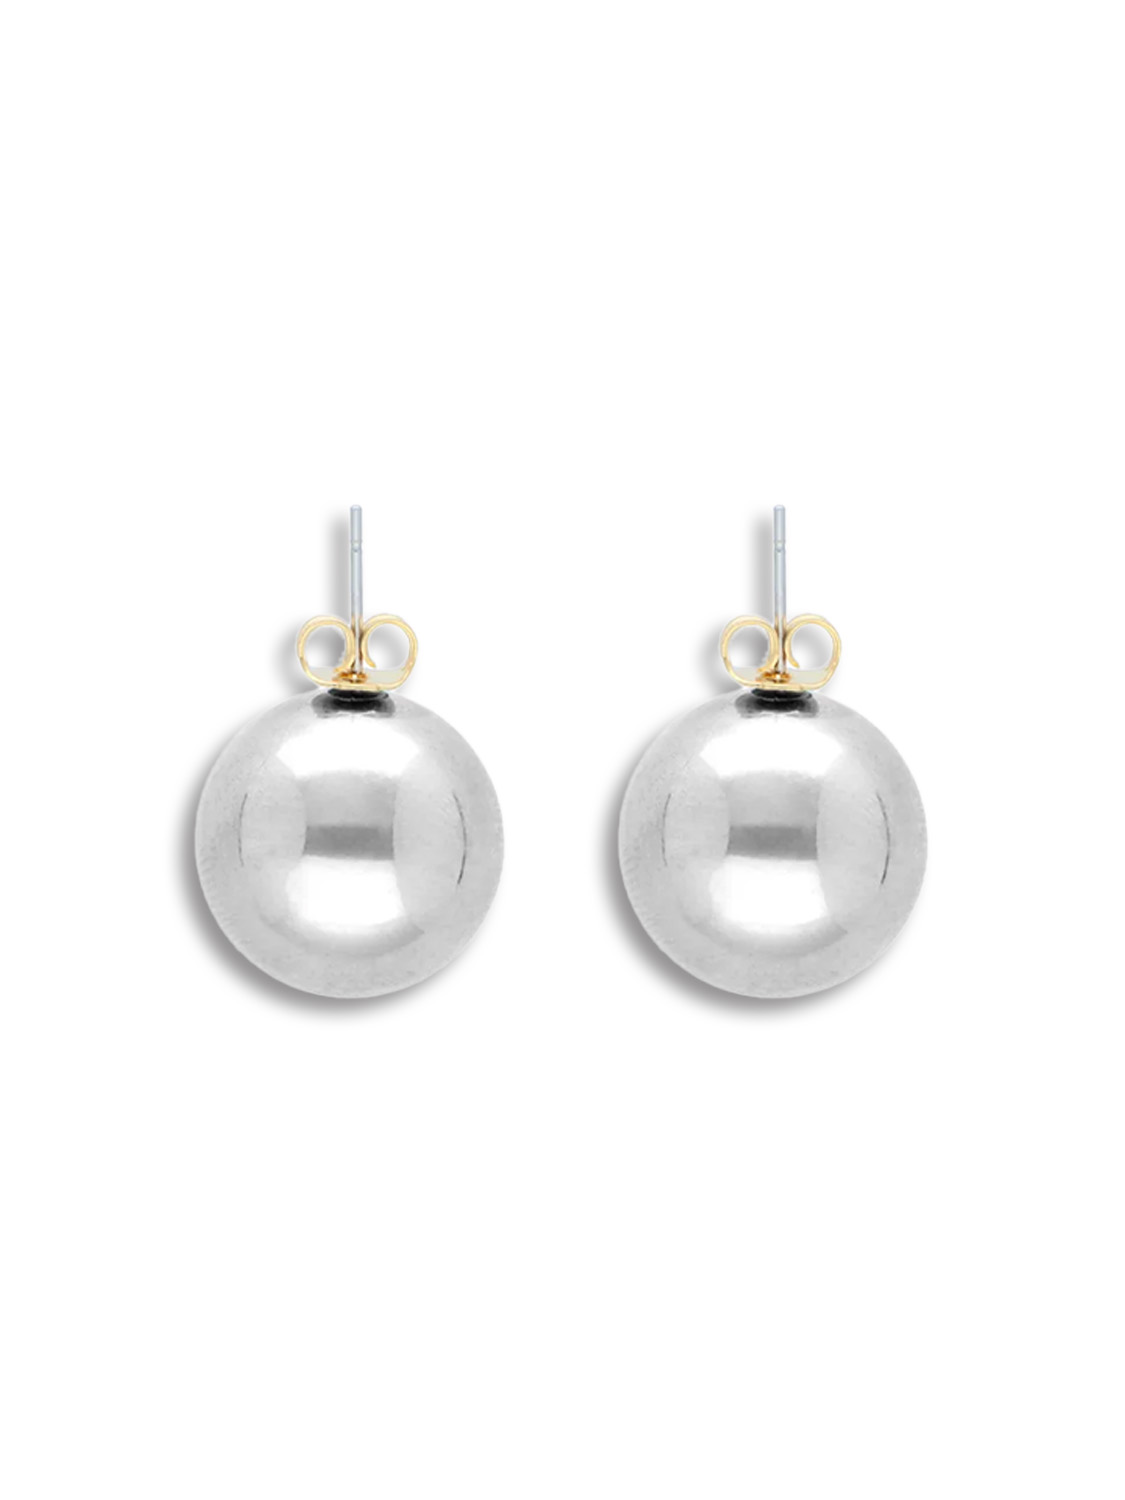 Dot Earring - Ear studs in ball design